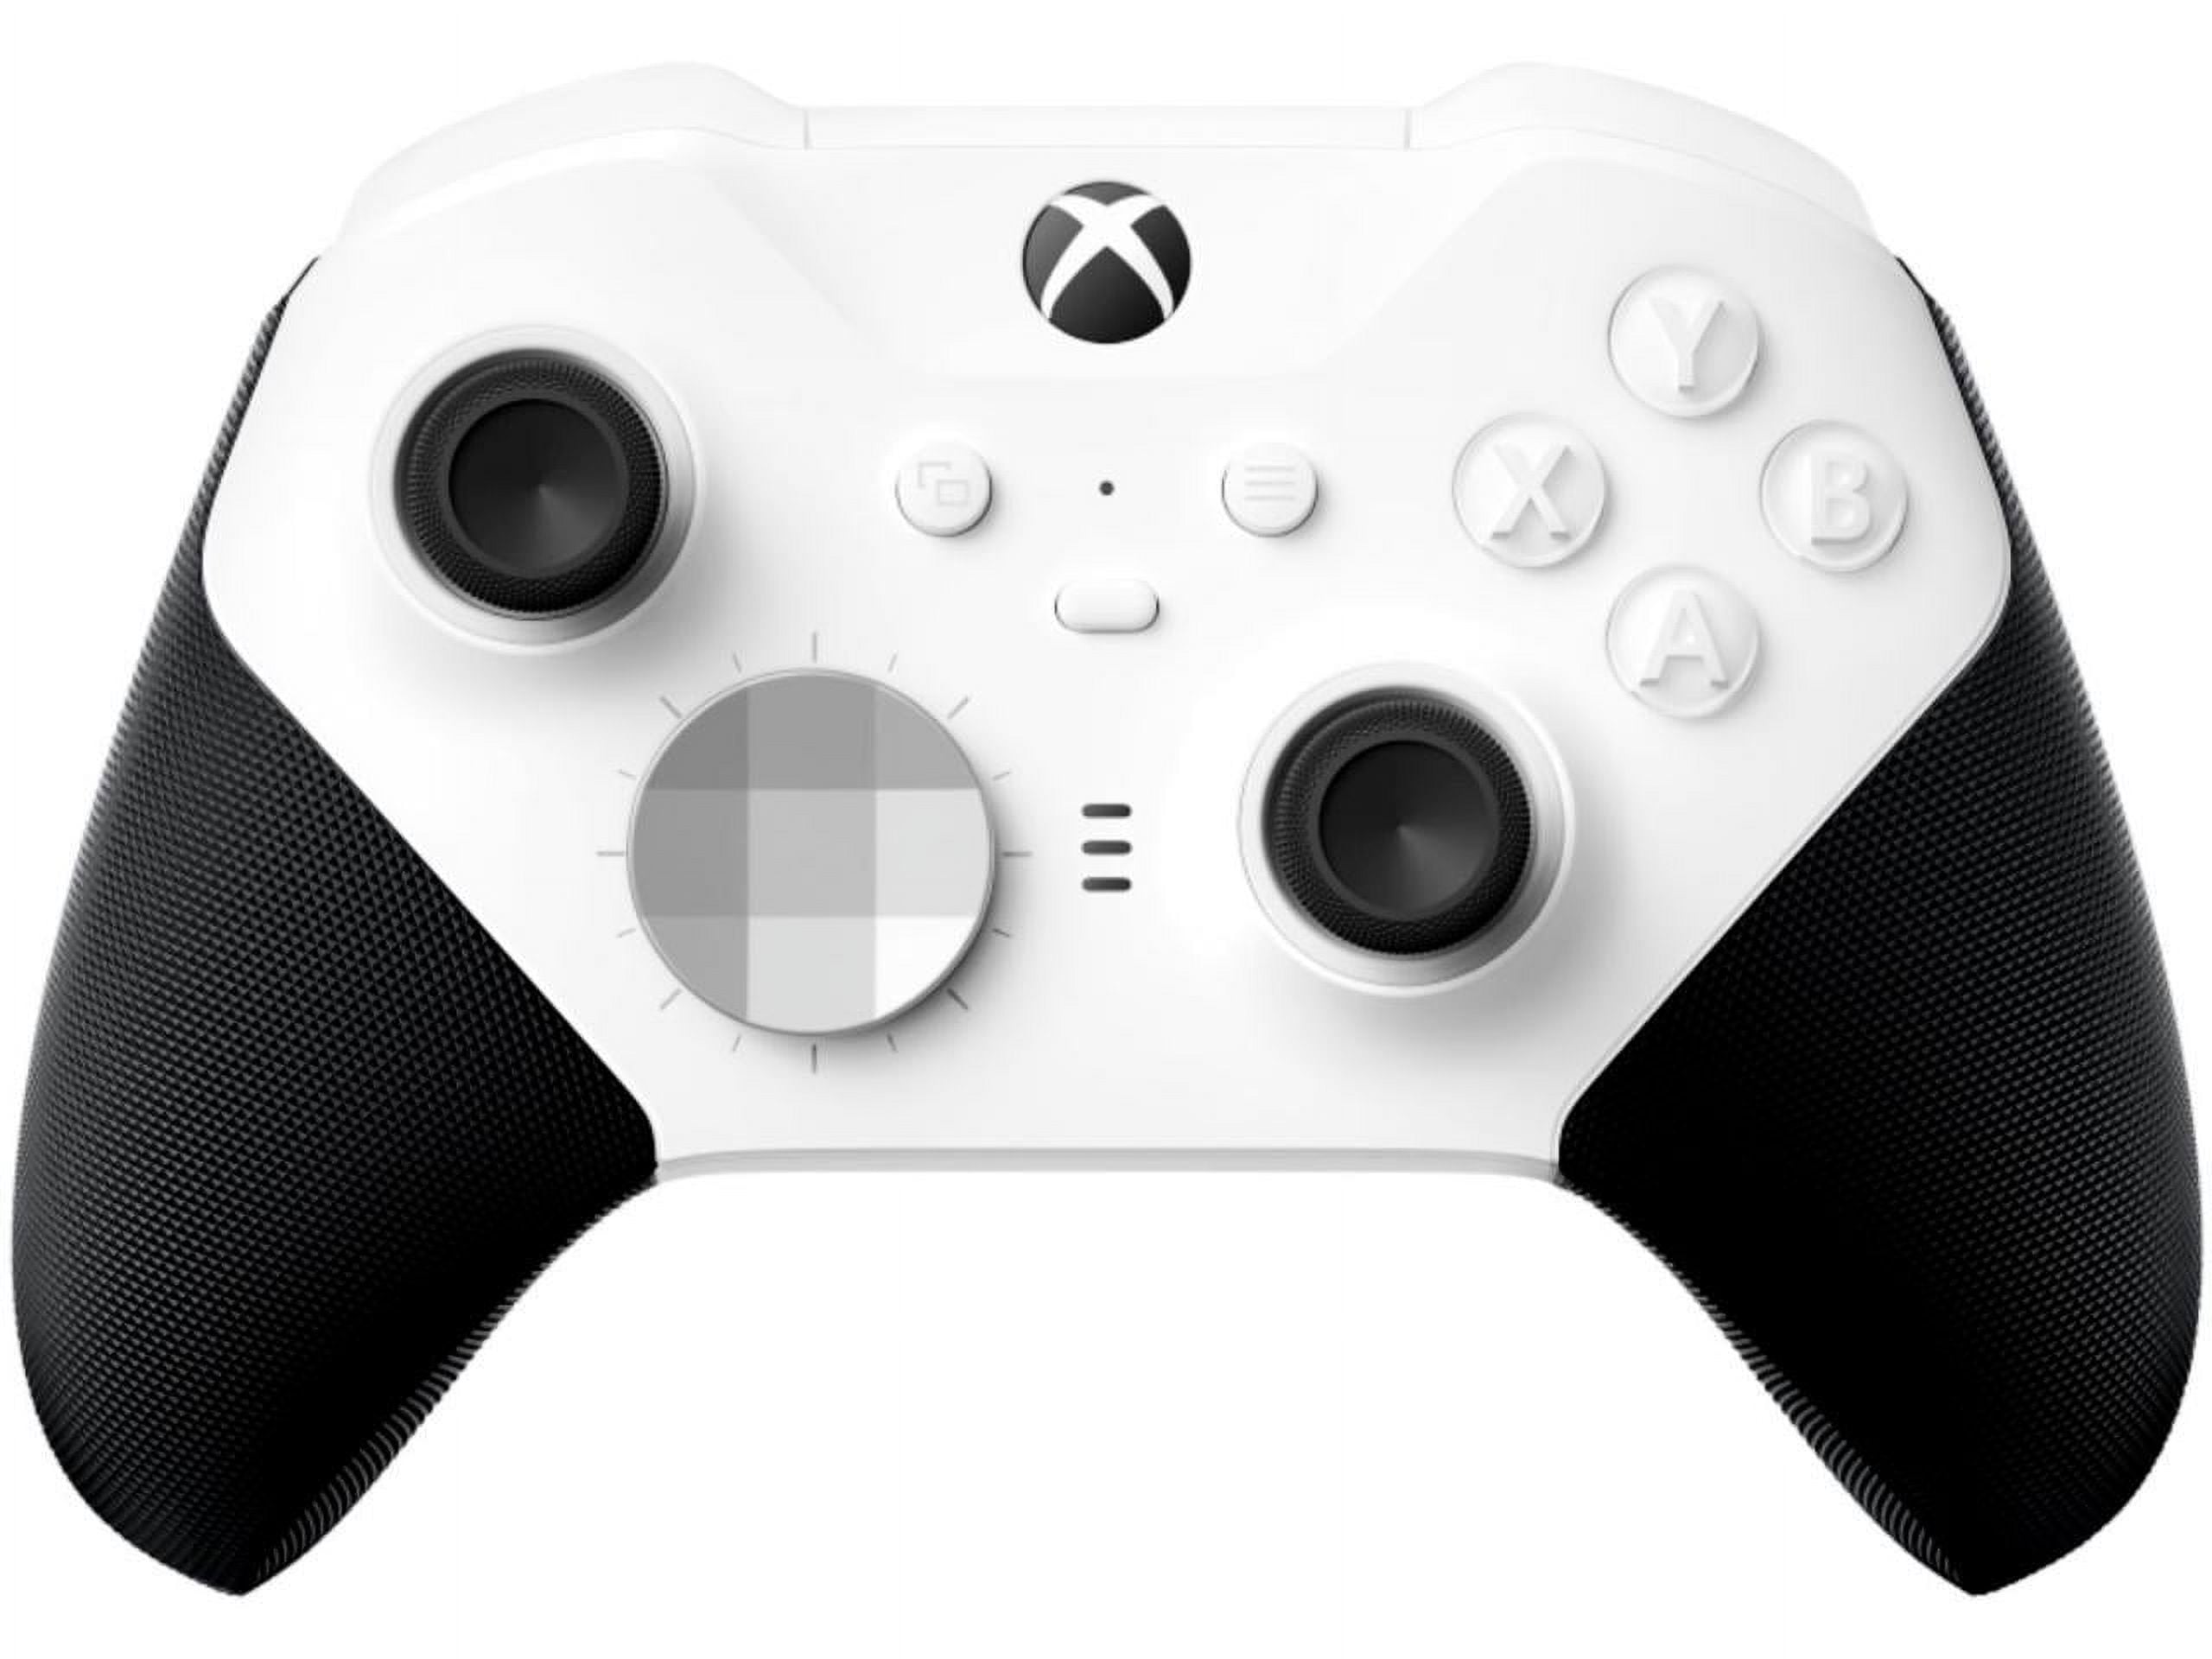 Xbox Elite Wireless Controller Series 2 - Black